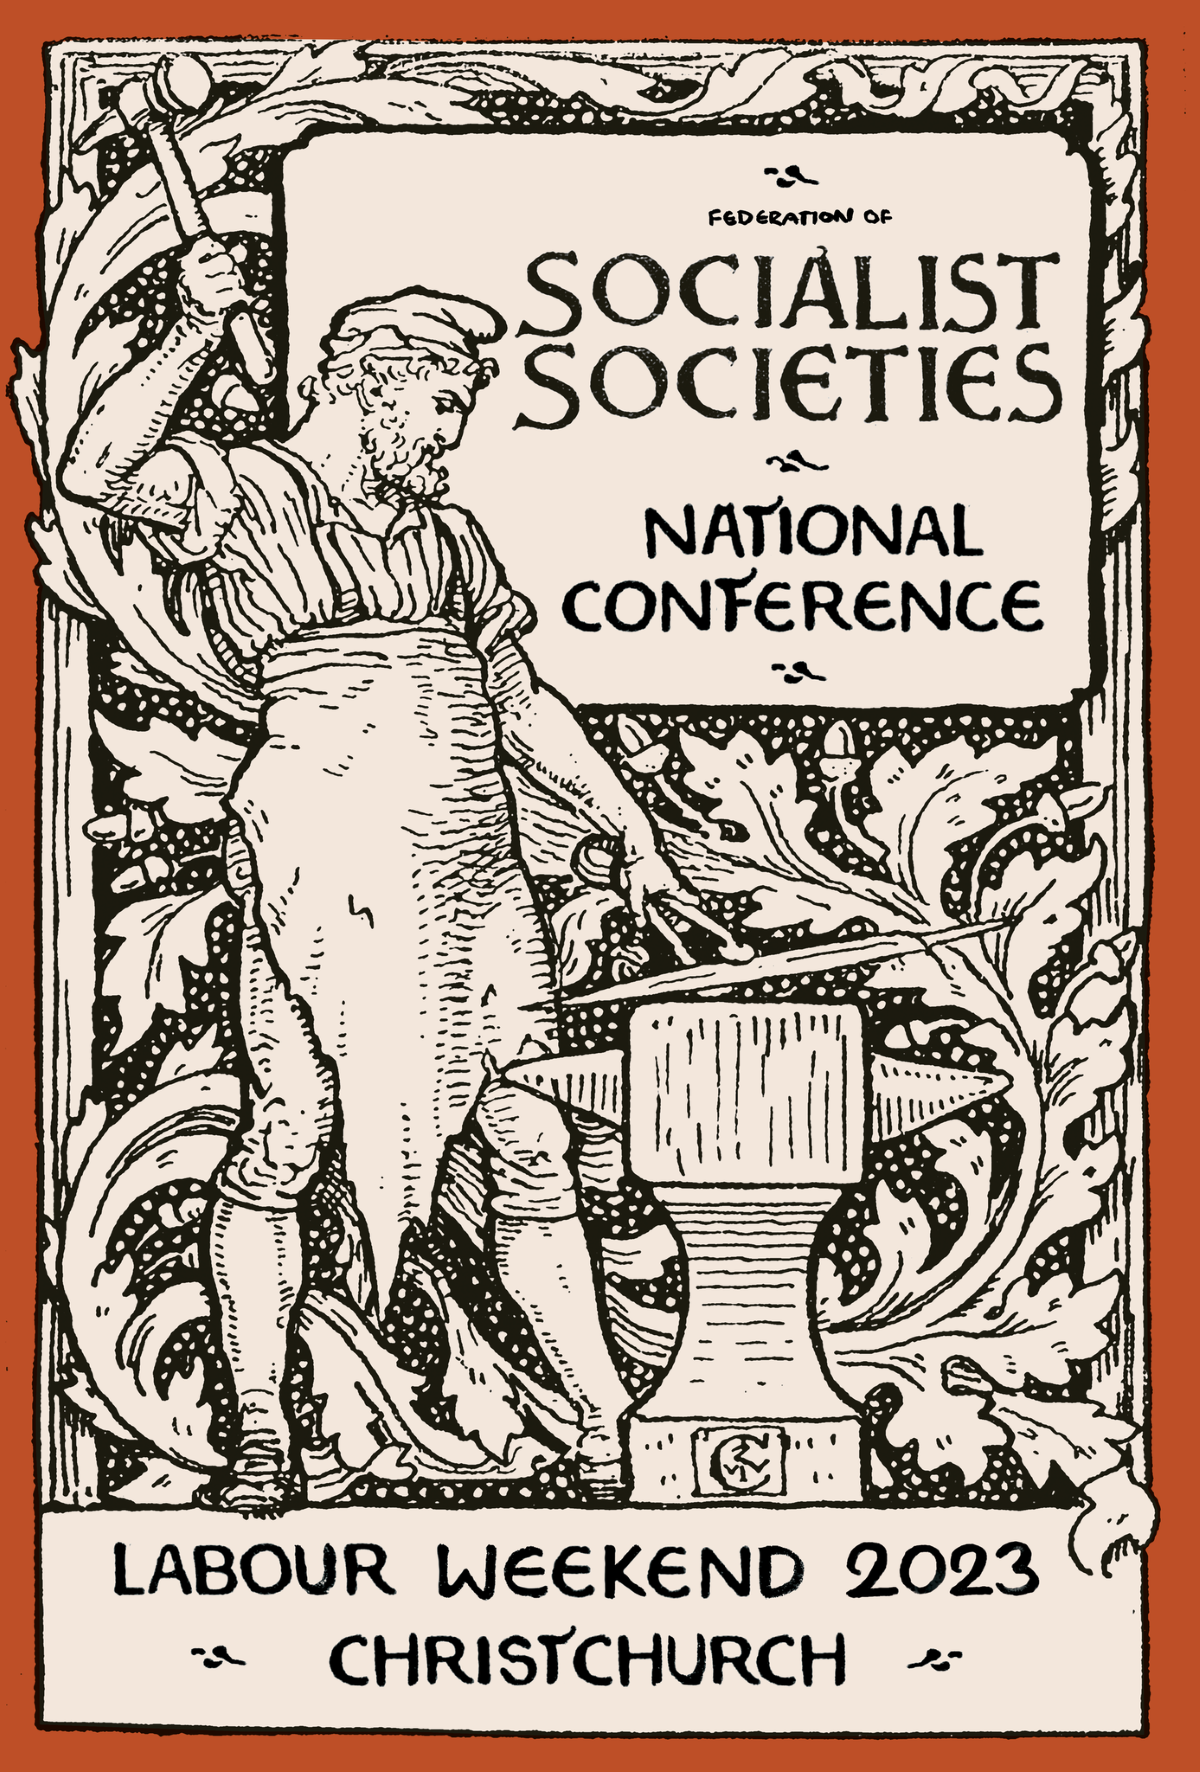 Federation of Socialist Societies